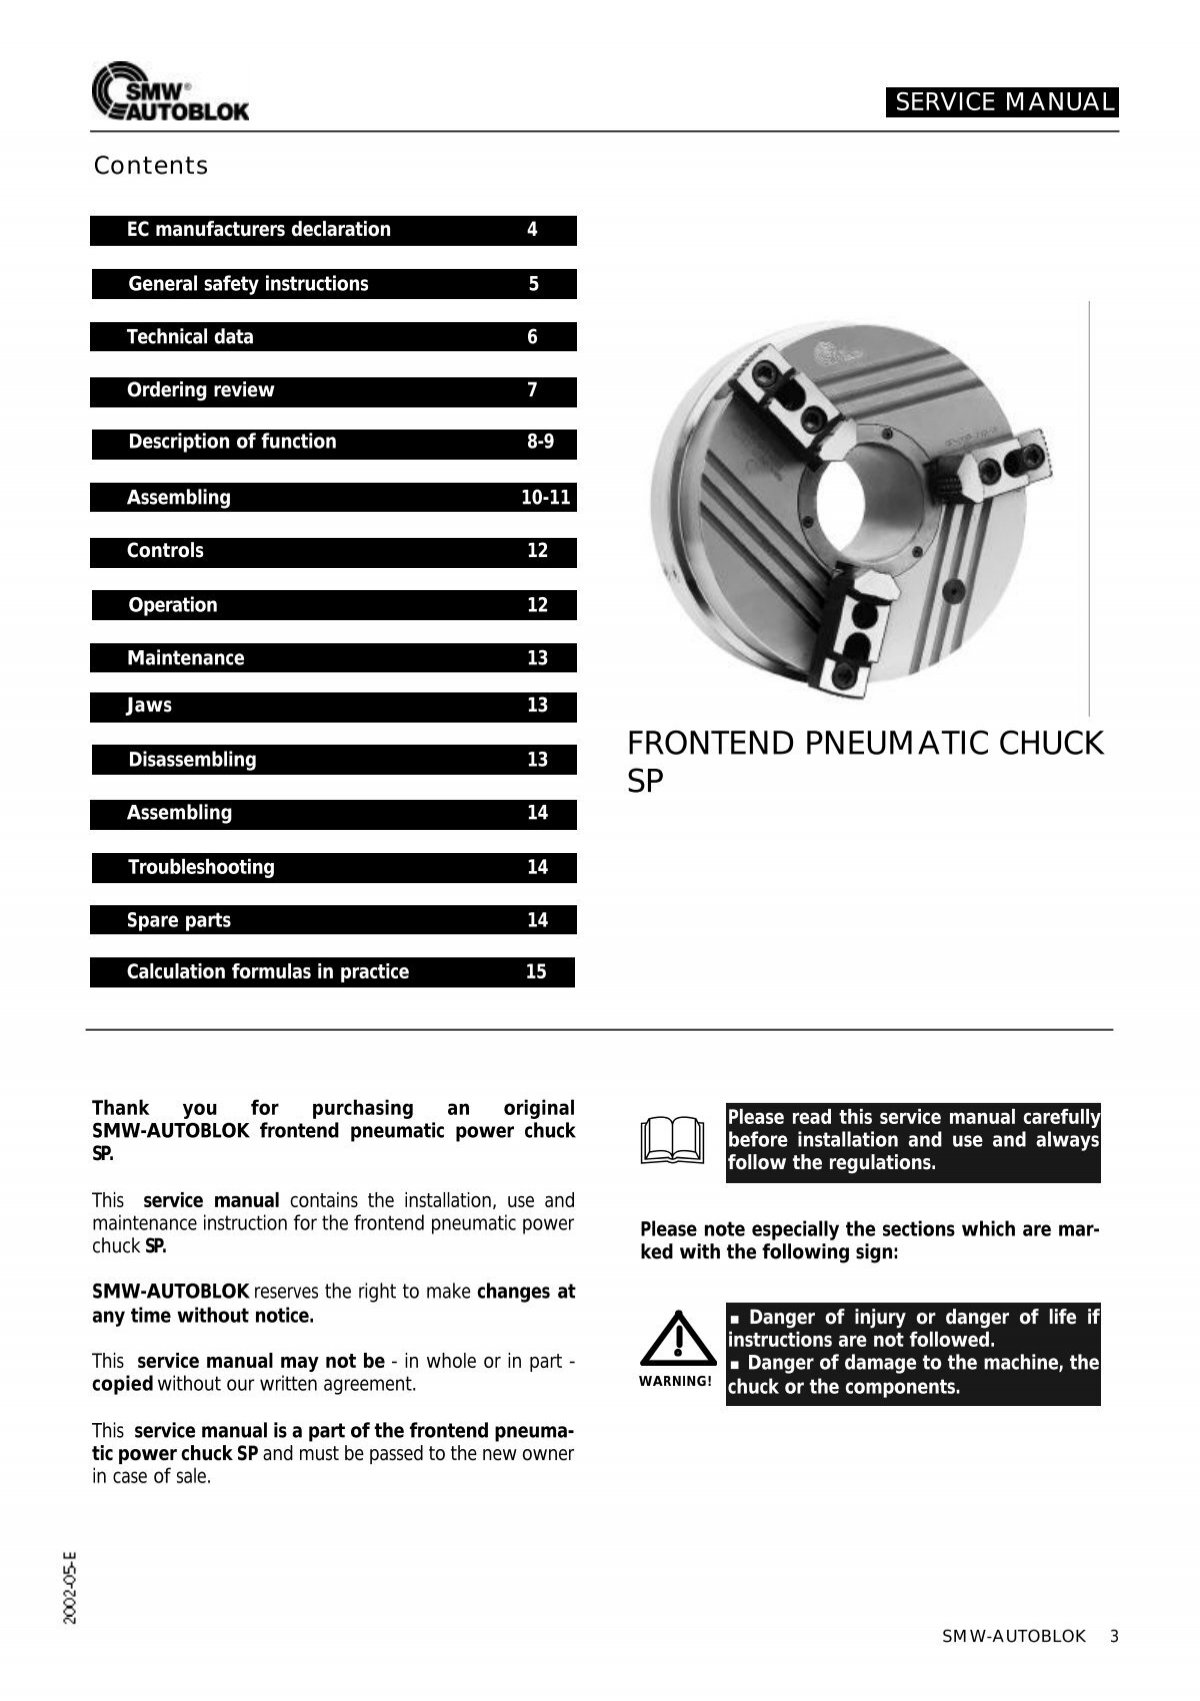 SP Manual - SMW Autoblok